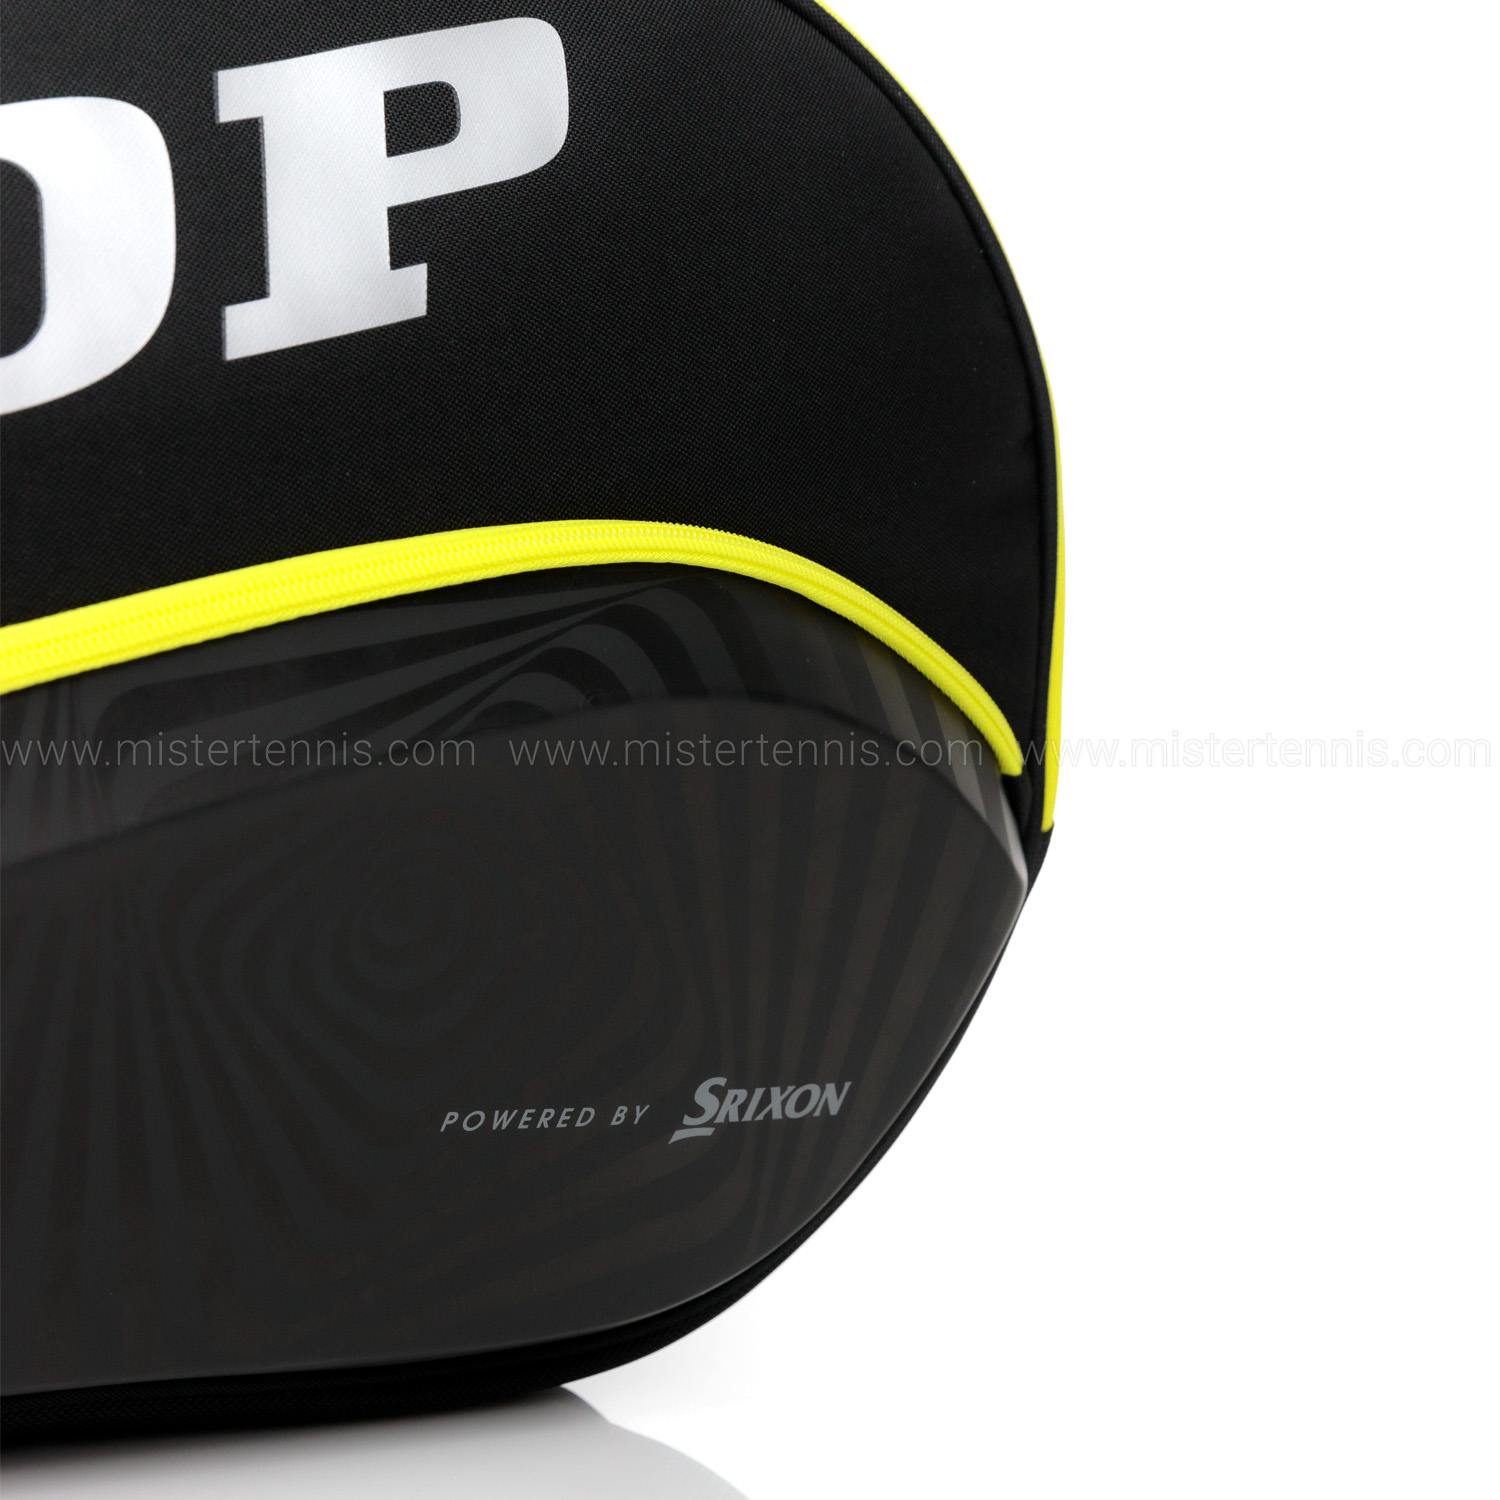 Dunlop SX Performance x 12 Thermo Borsa - Black/Yellow